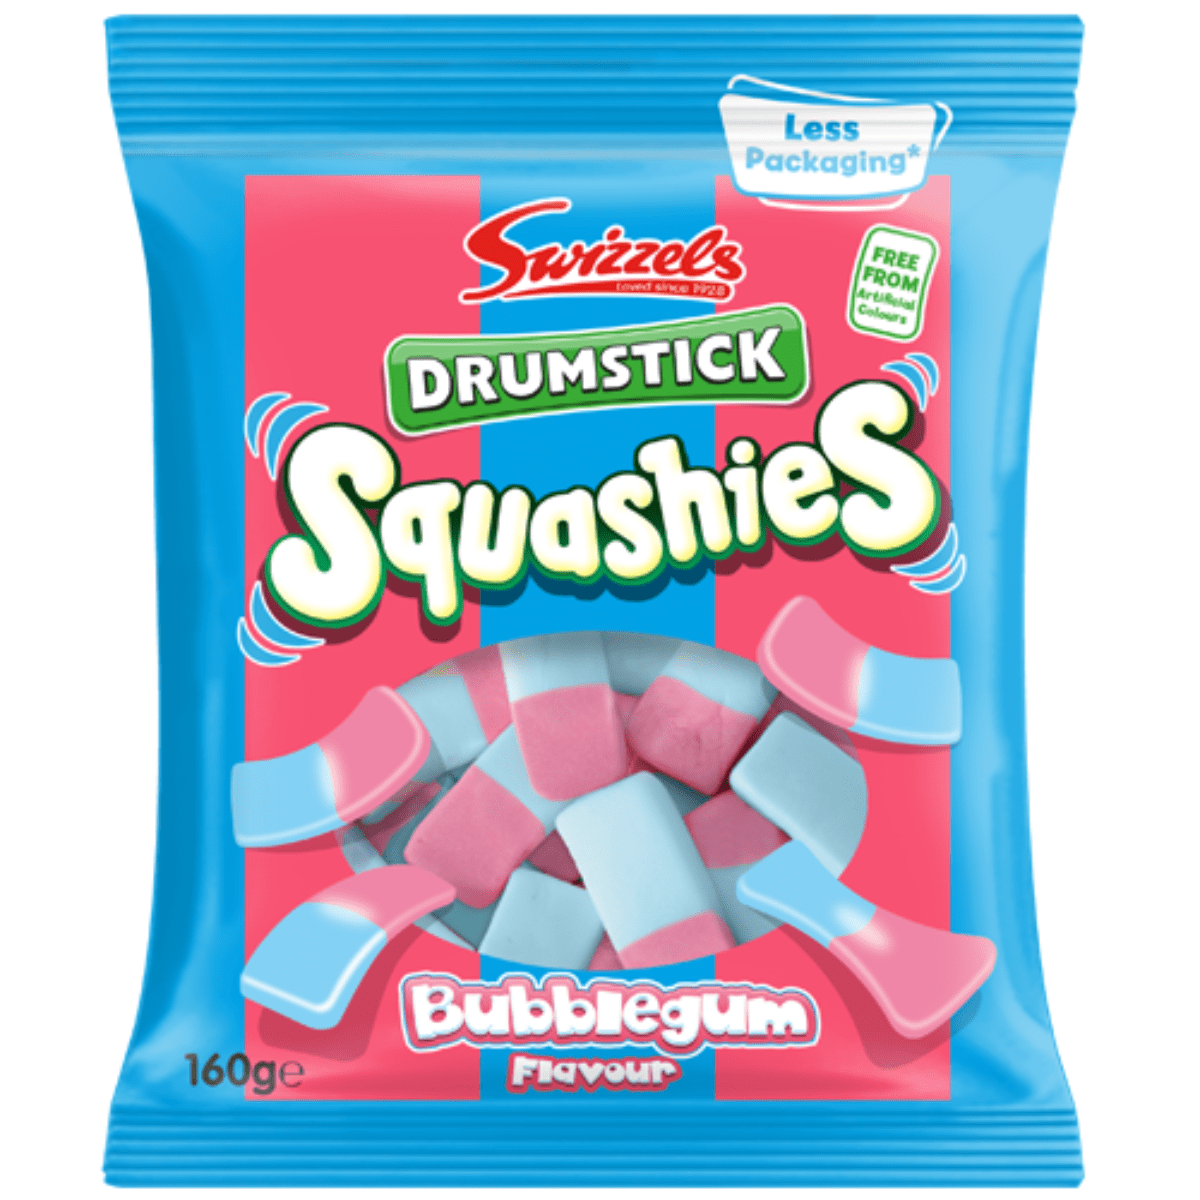 Drumstick Squashies Bubblegum 160g